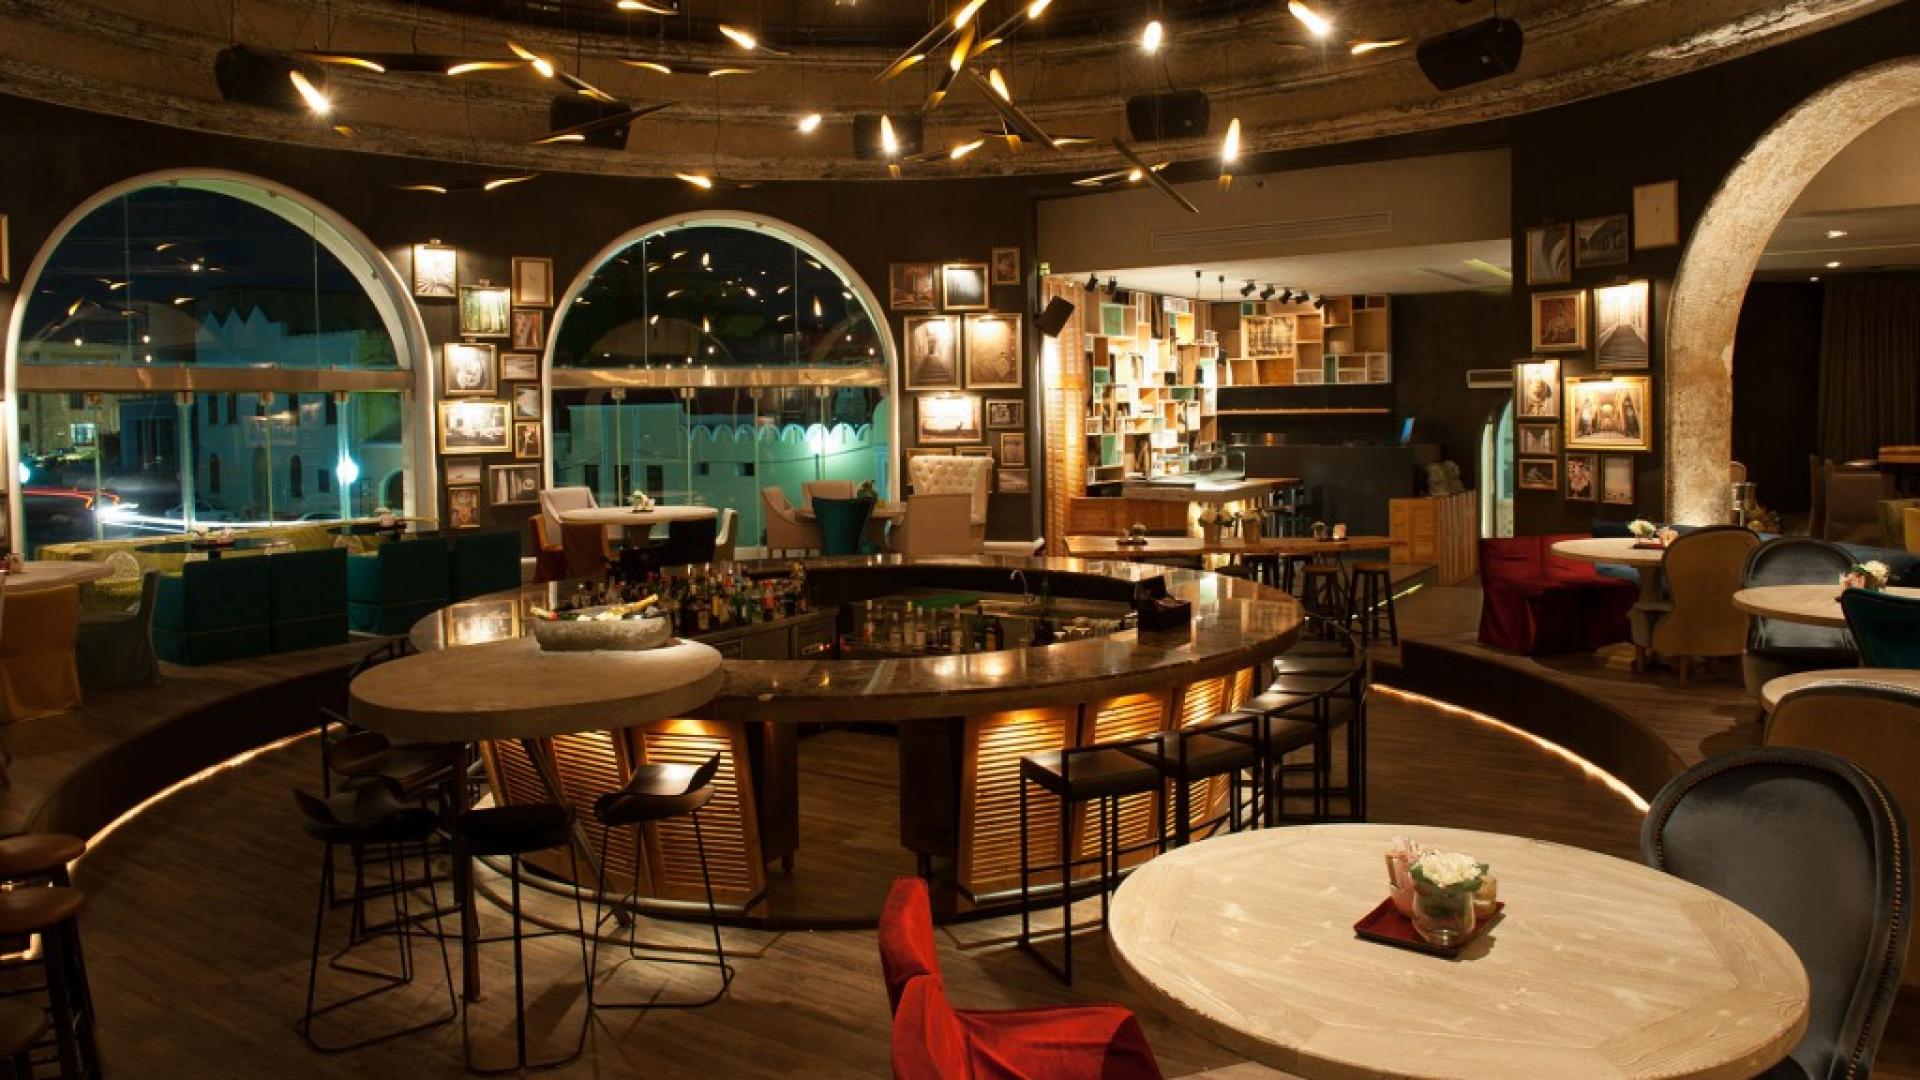 Ronda beach bar restaurant